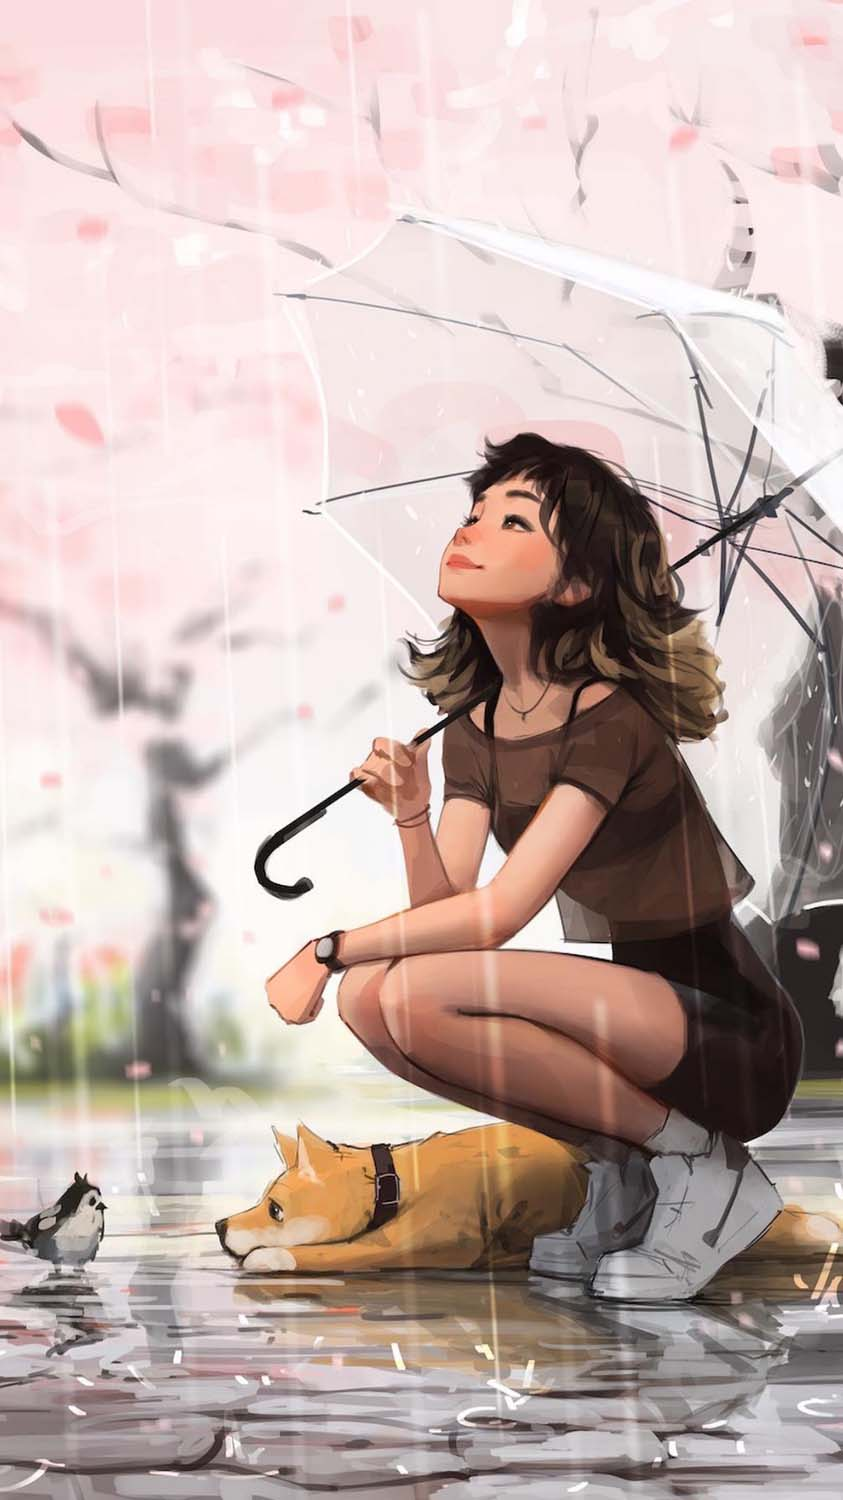 Girl Feeling The Rain IPhone Wallpaper HD  IPhone Wallpapers